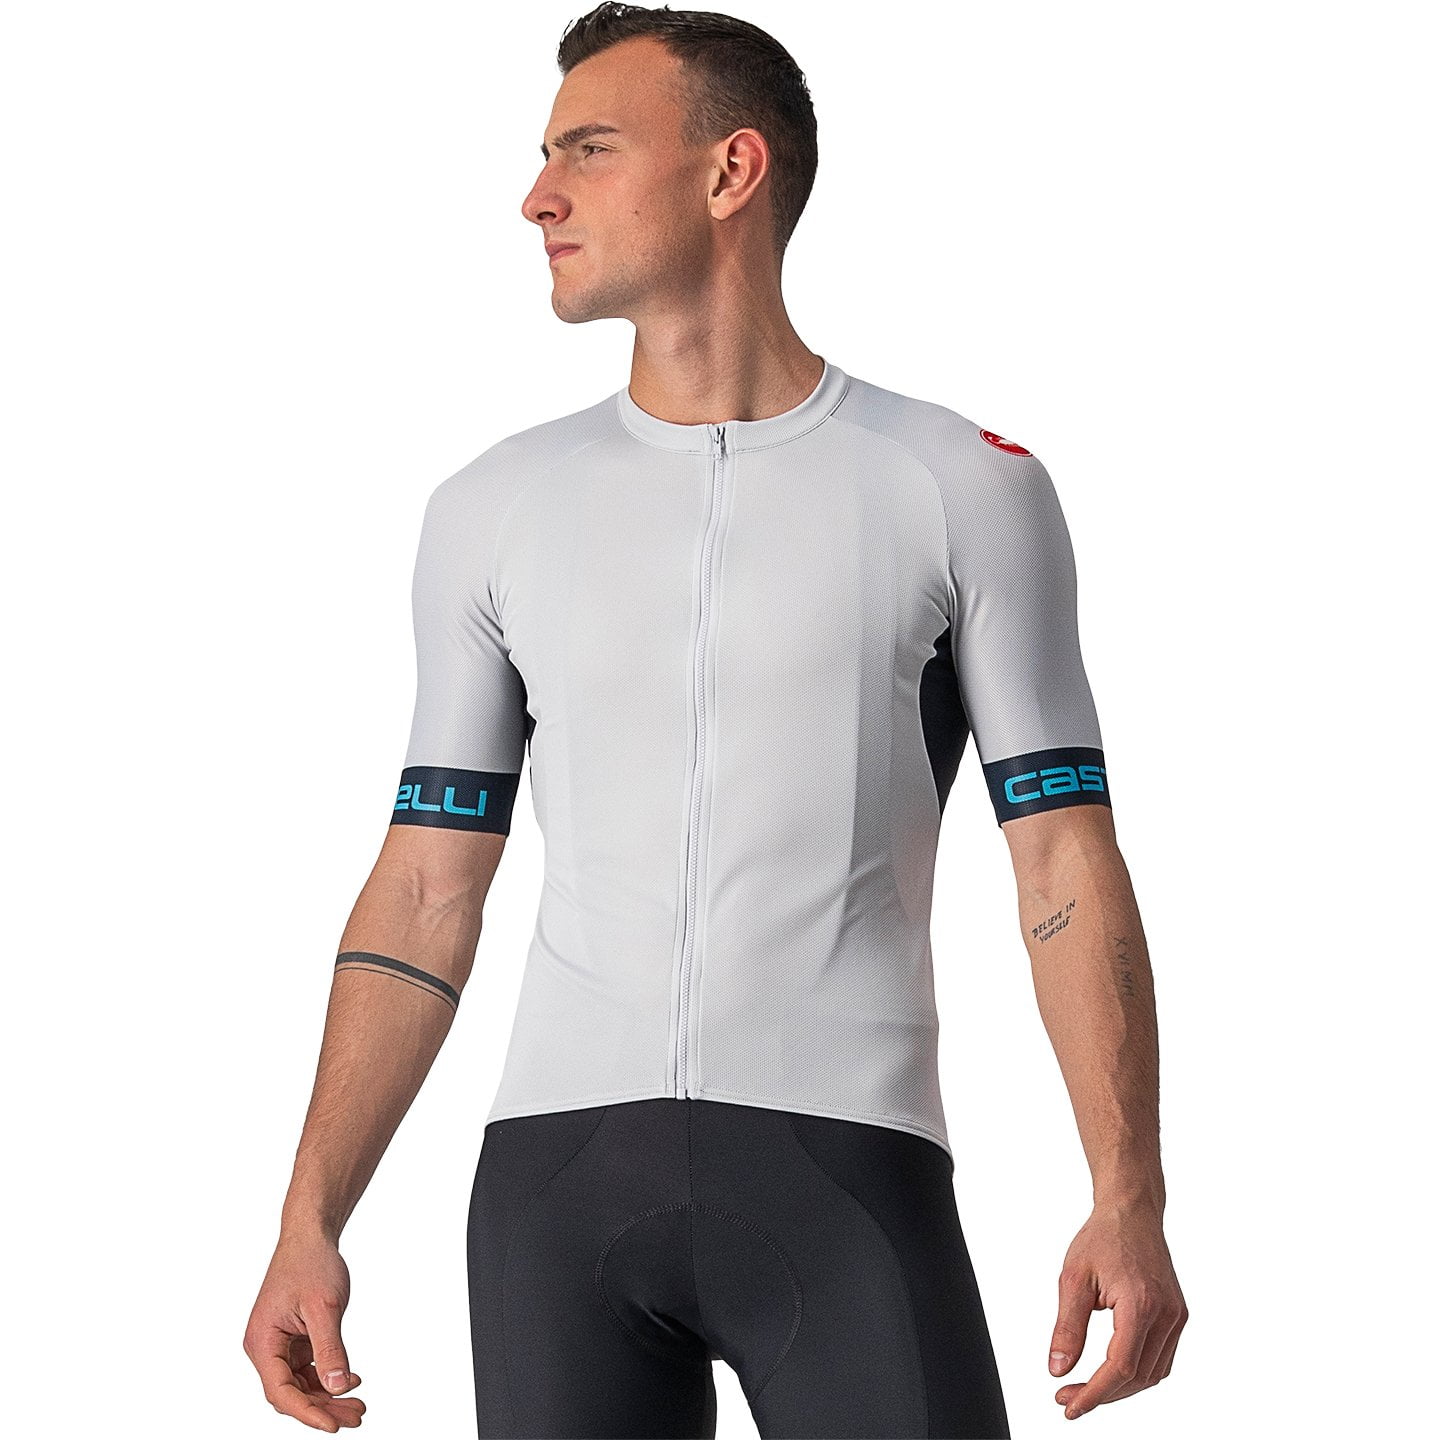 CASTELLI Entrata VI Short Sleeve Jersey Short Sleeve Jersey, for men, size 2XL, Cycling jersey, Cycle clothing